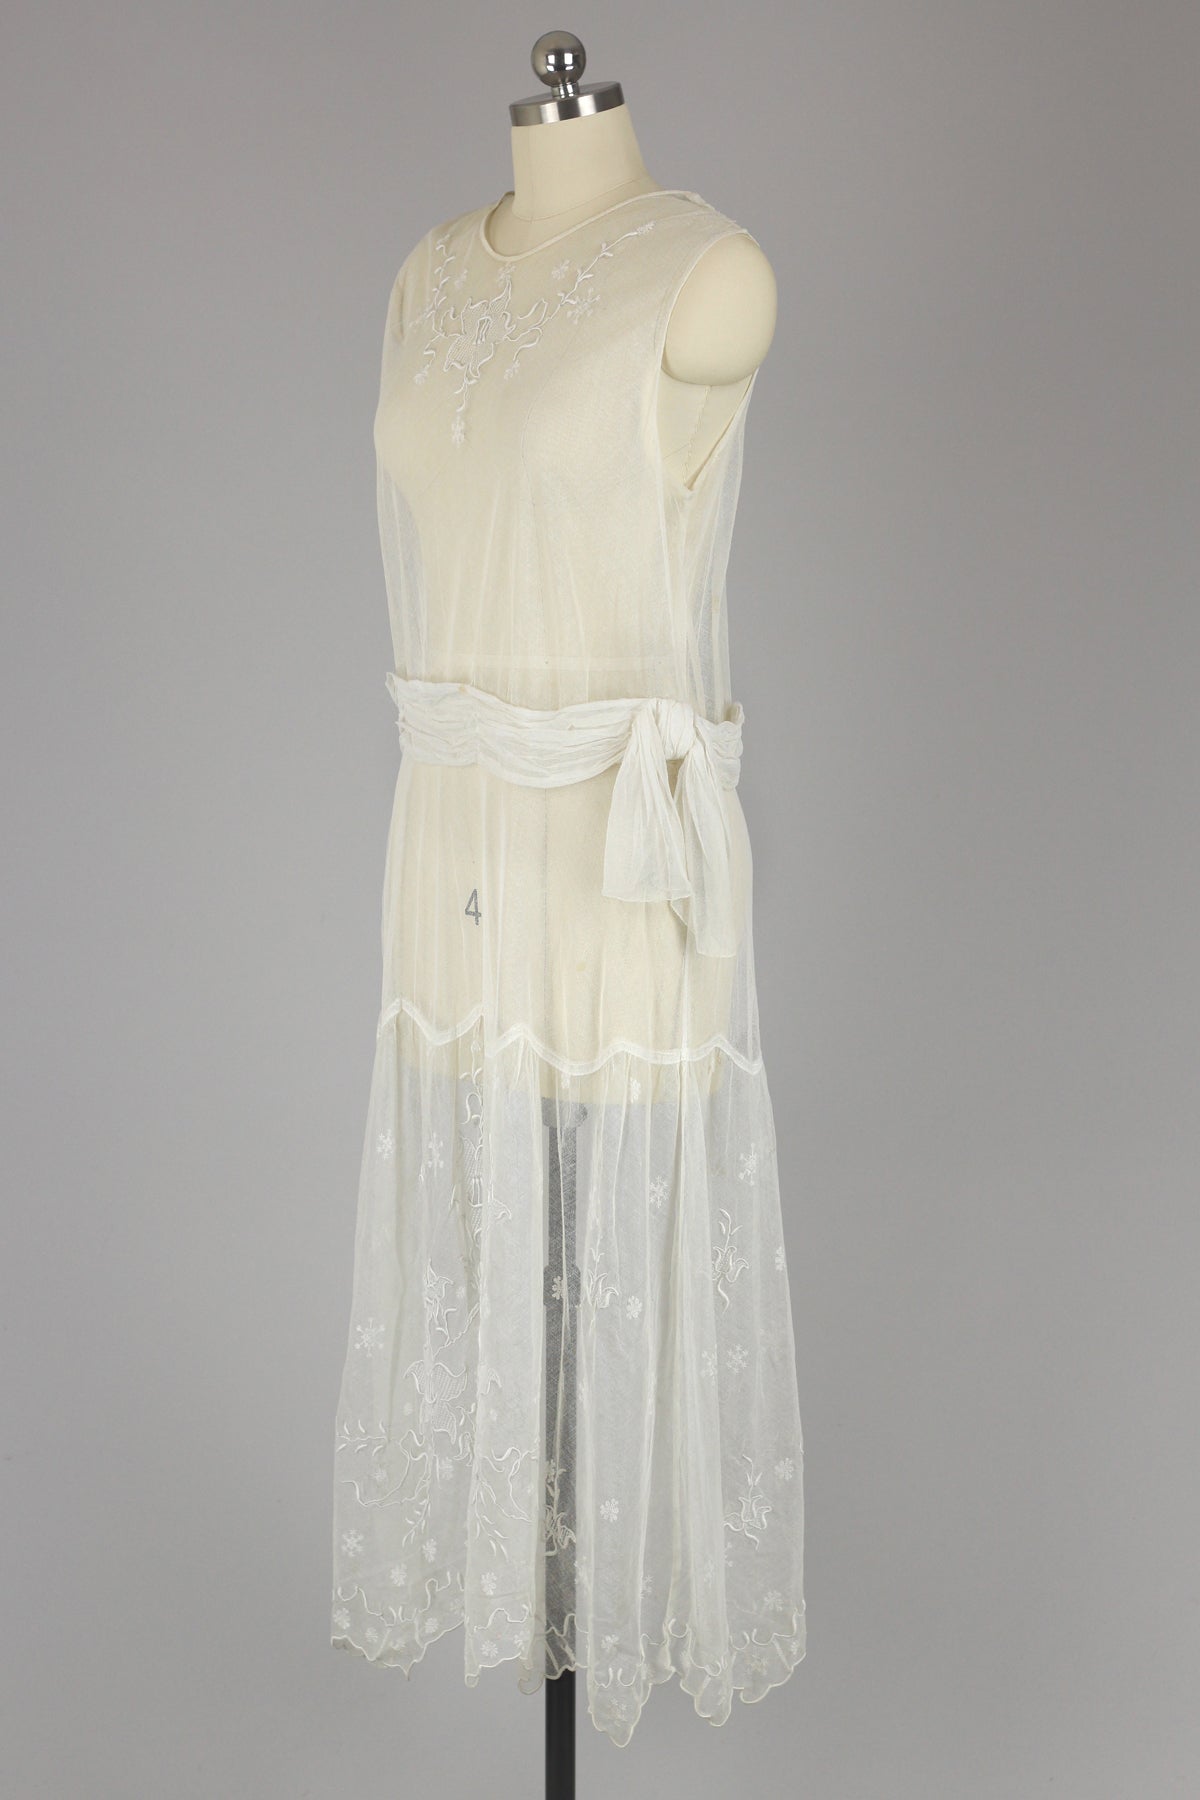 Edwardian 1920s Lace Tea Dress